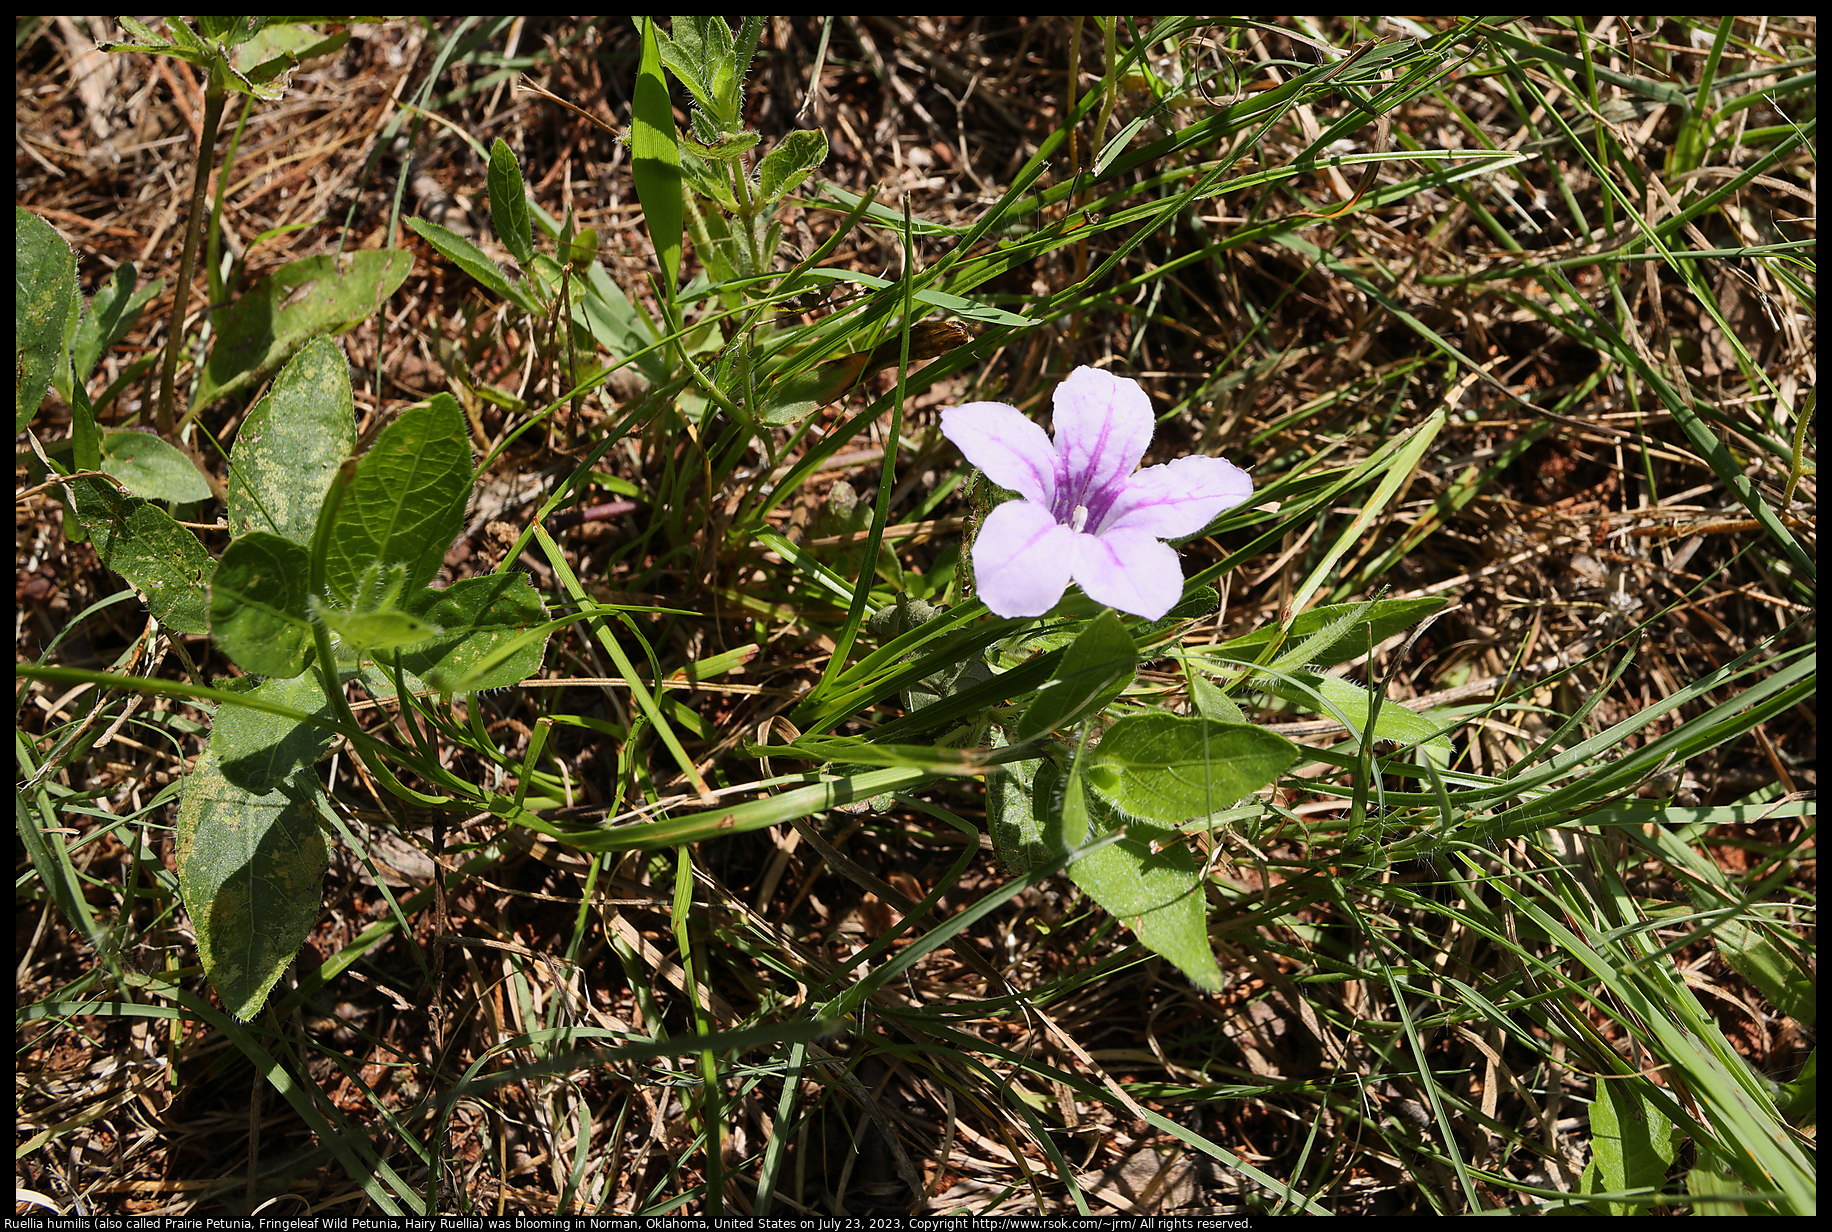 Ruellia humilis (also called Prairie Petunia, Fringeleaf Wild Petunia, Hairy Ruellia) was blooming in Norman, Oklahoma, United States on July 23, 2023